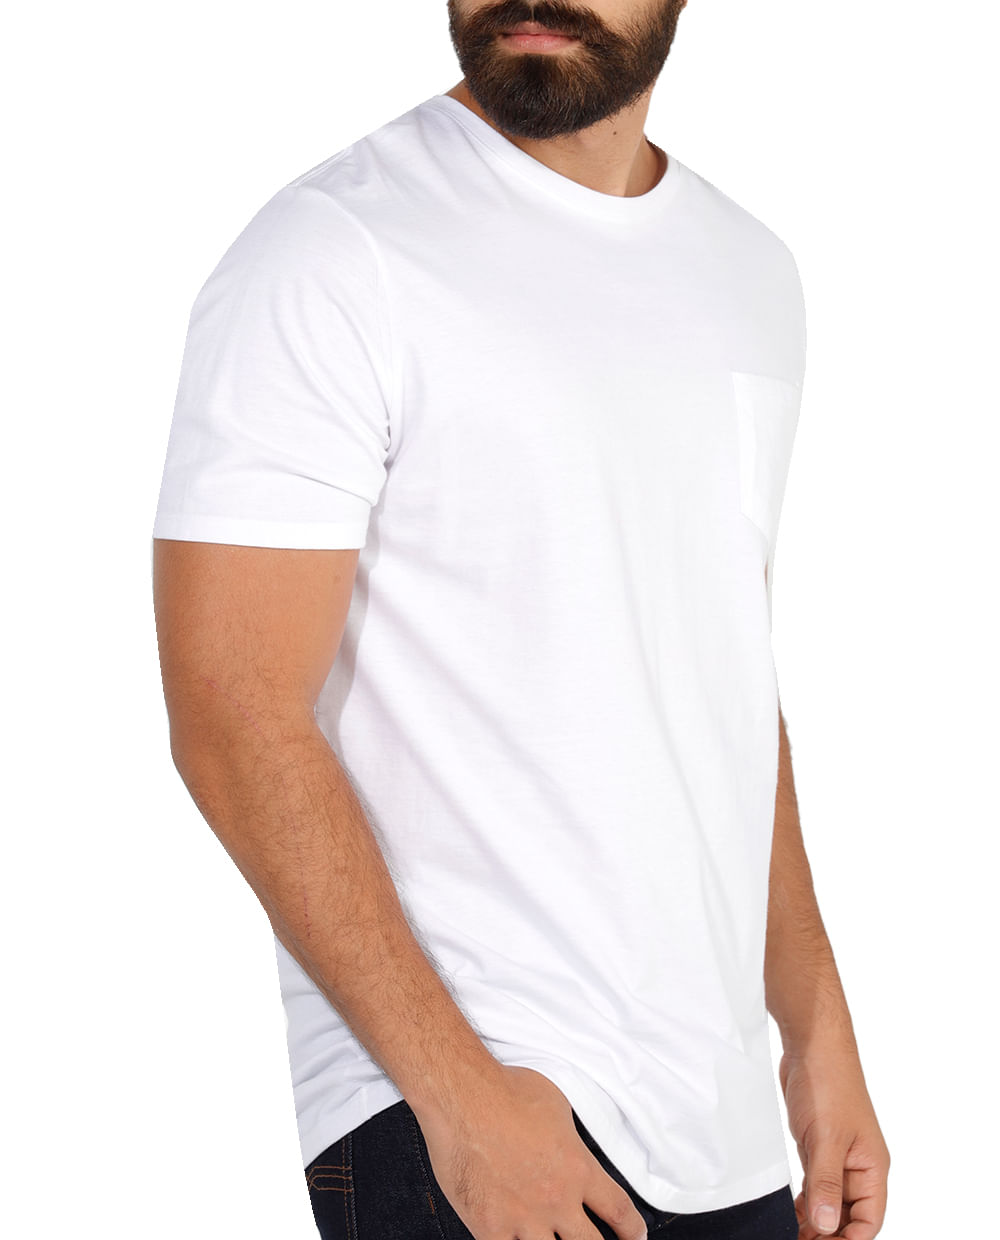 Camiseta básica blanca hombre – Bausi